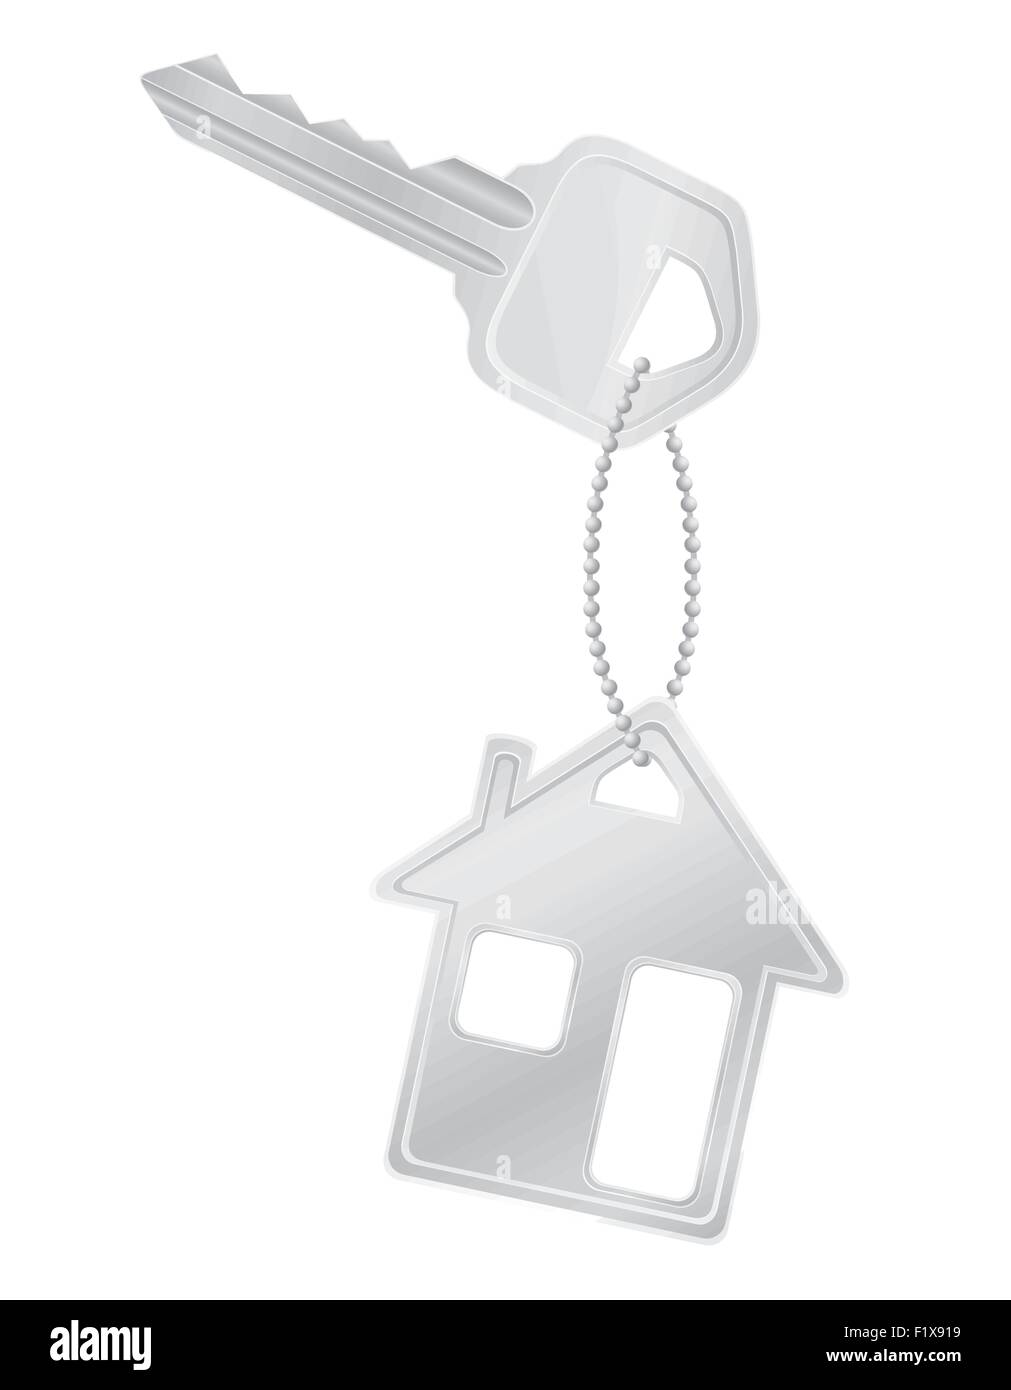 house key door lock vector illustration isolated on white background Stock Vector